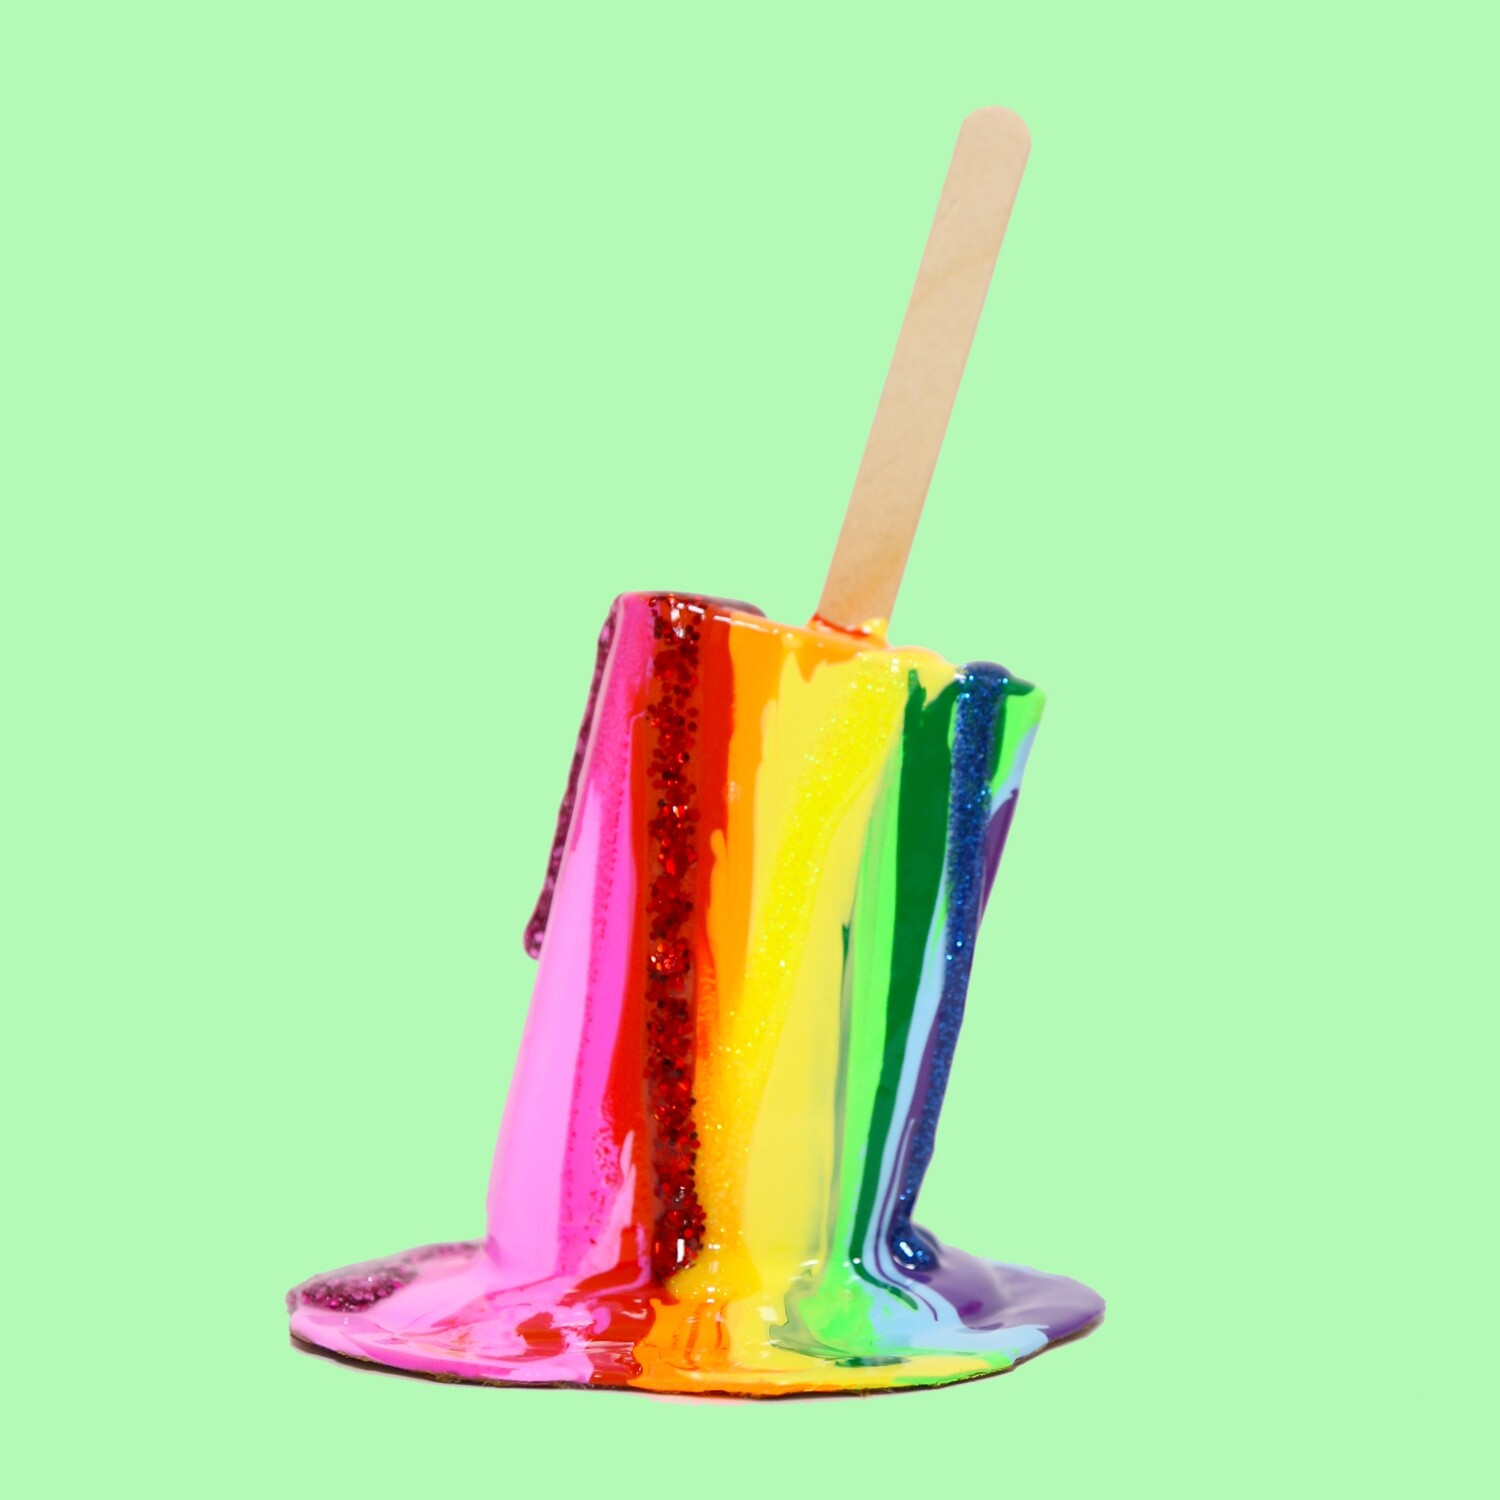 Melting Popsicle Art - Eye Candy - Original Melting Pops